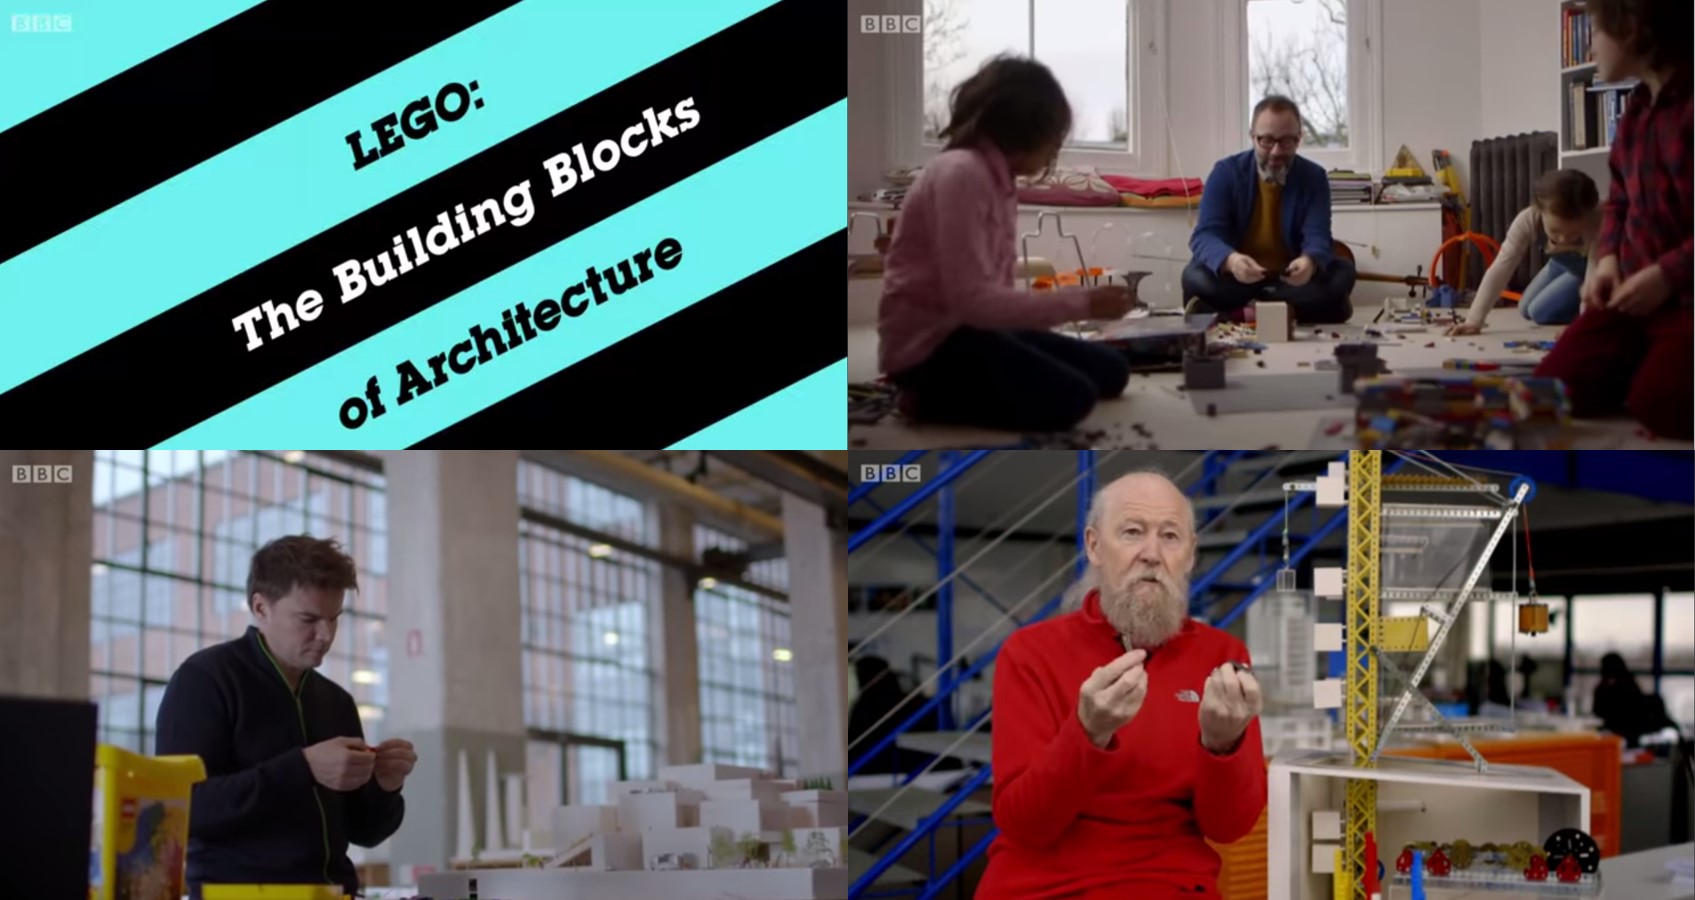 Metro posponer panorama Videos about LEGO Architecture - Tom Alphin